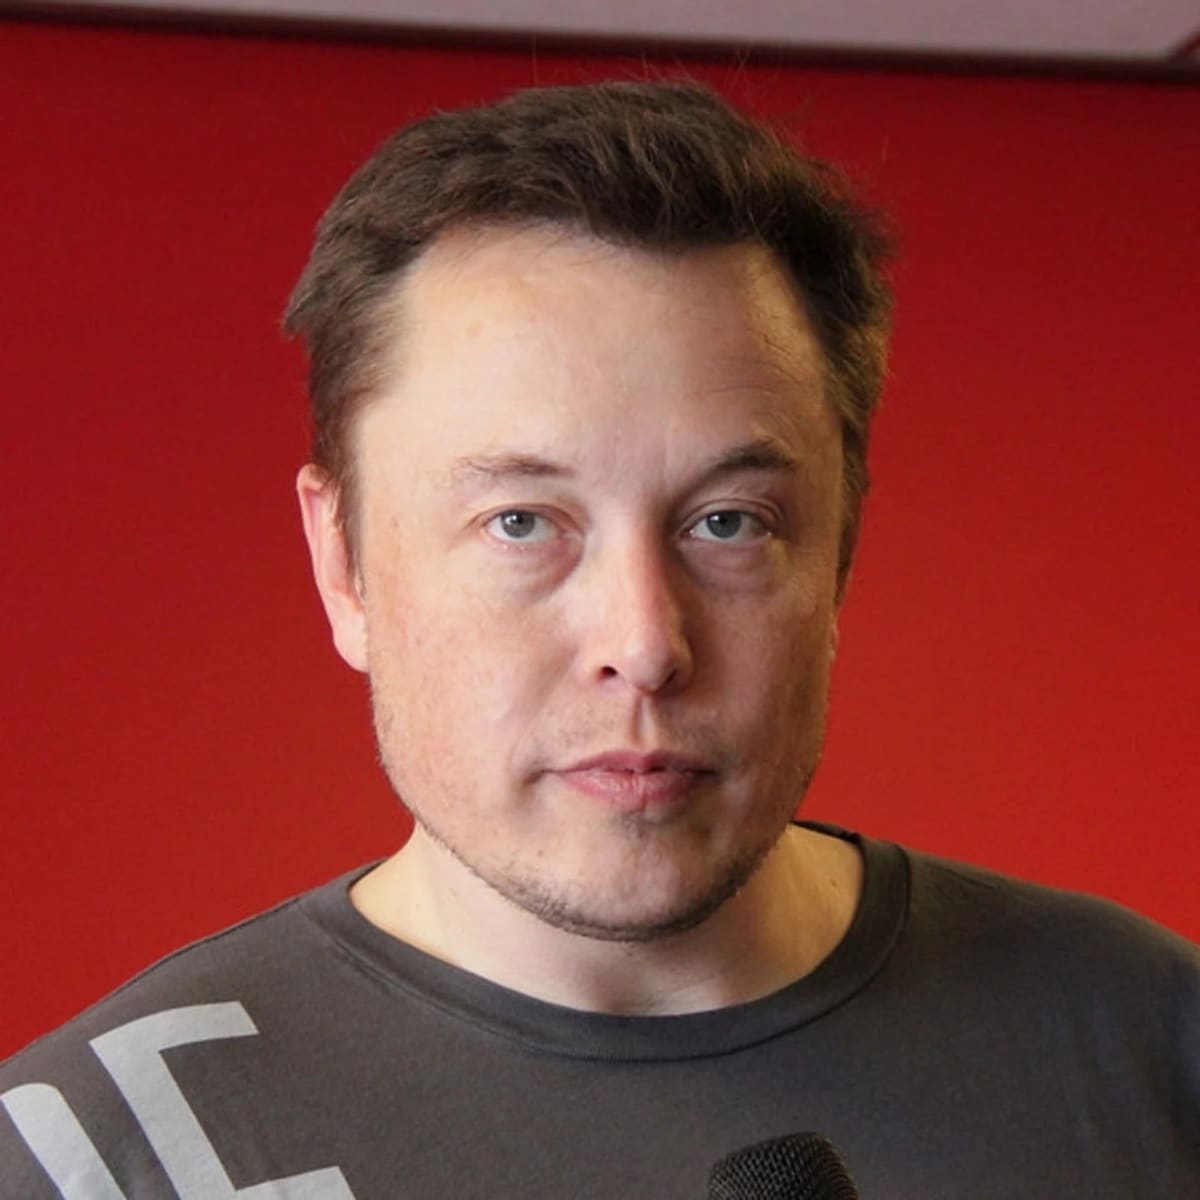 Elon Musk. Photo credit: Sourced